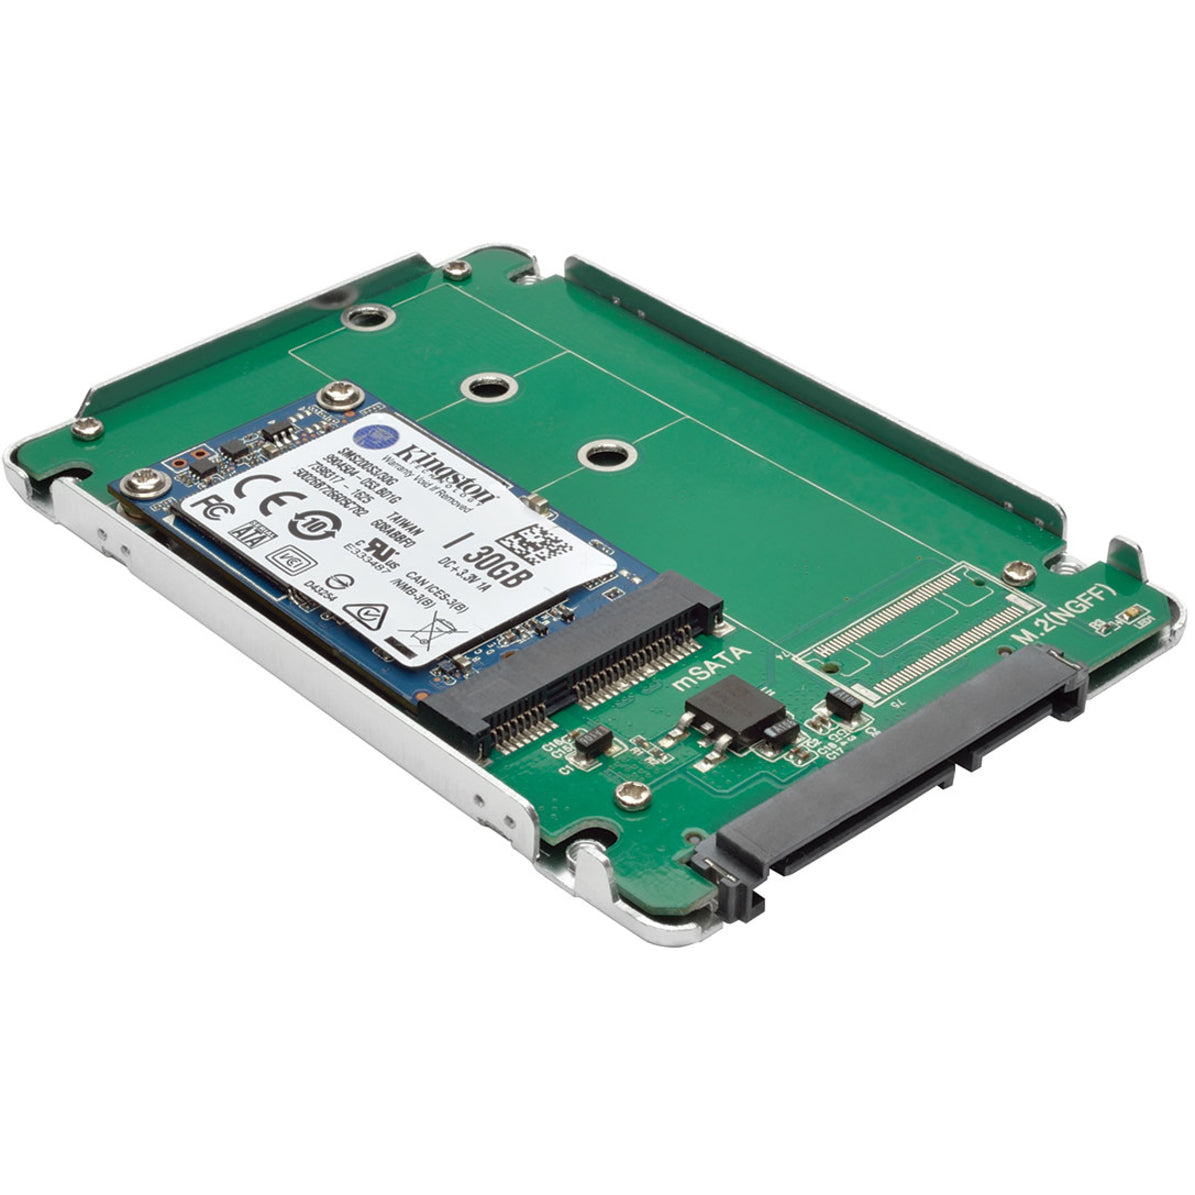 Tripp Lite P960-001-MSATA mSATA SSD to 2.5 in. SATA Enclosure Adapter Converter, Limited Warranty, China, RoHS